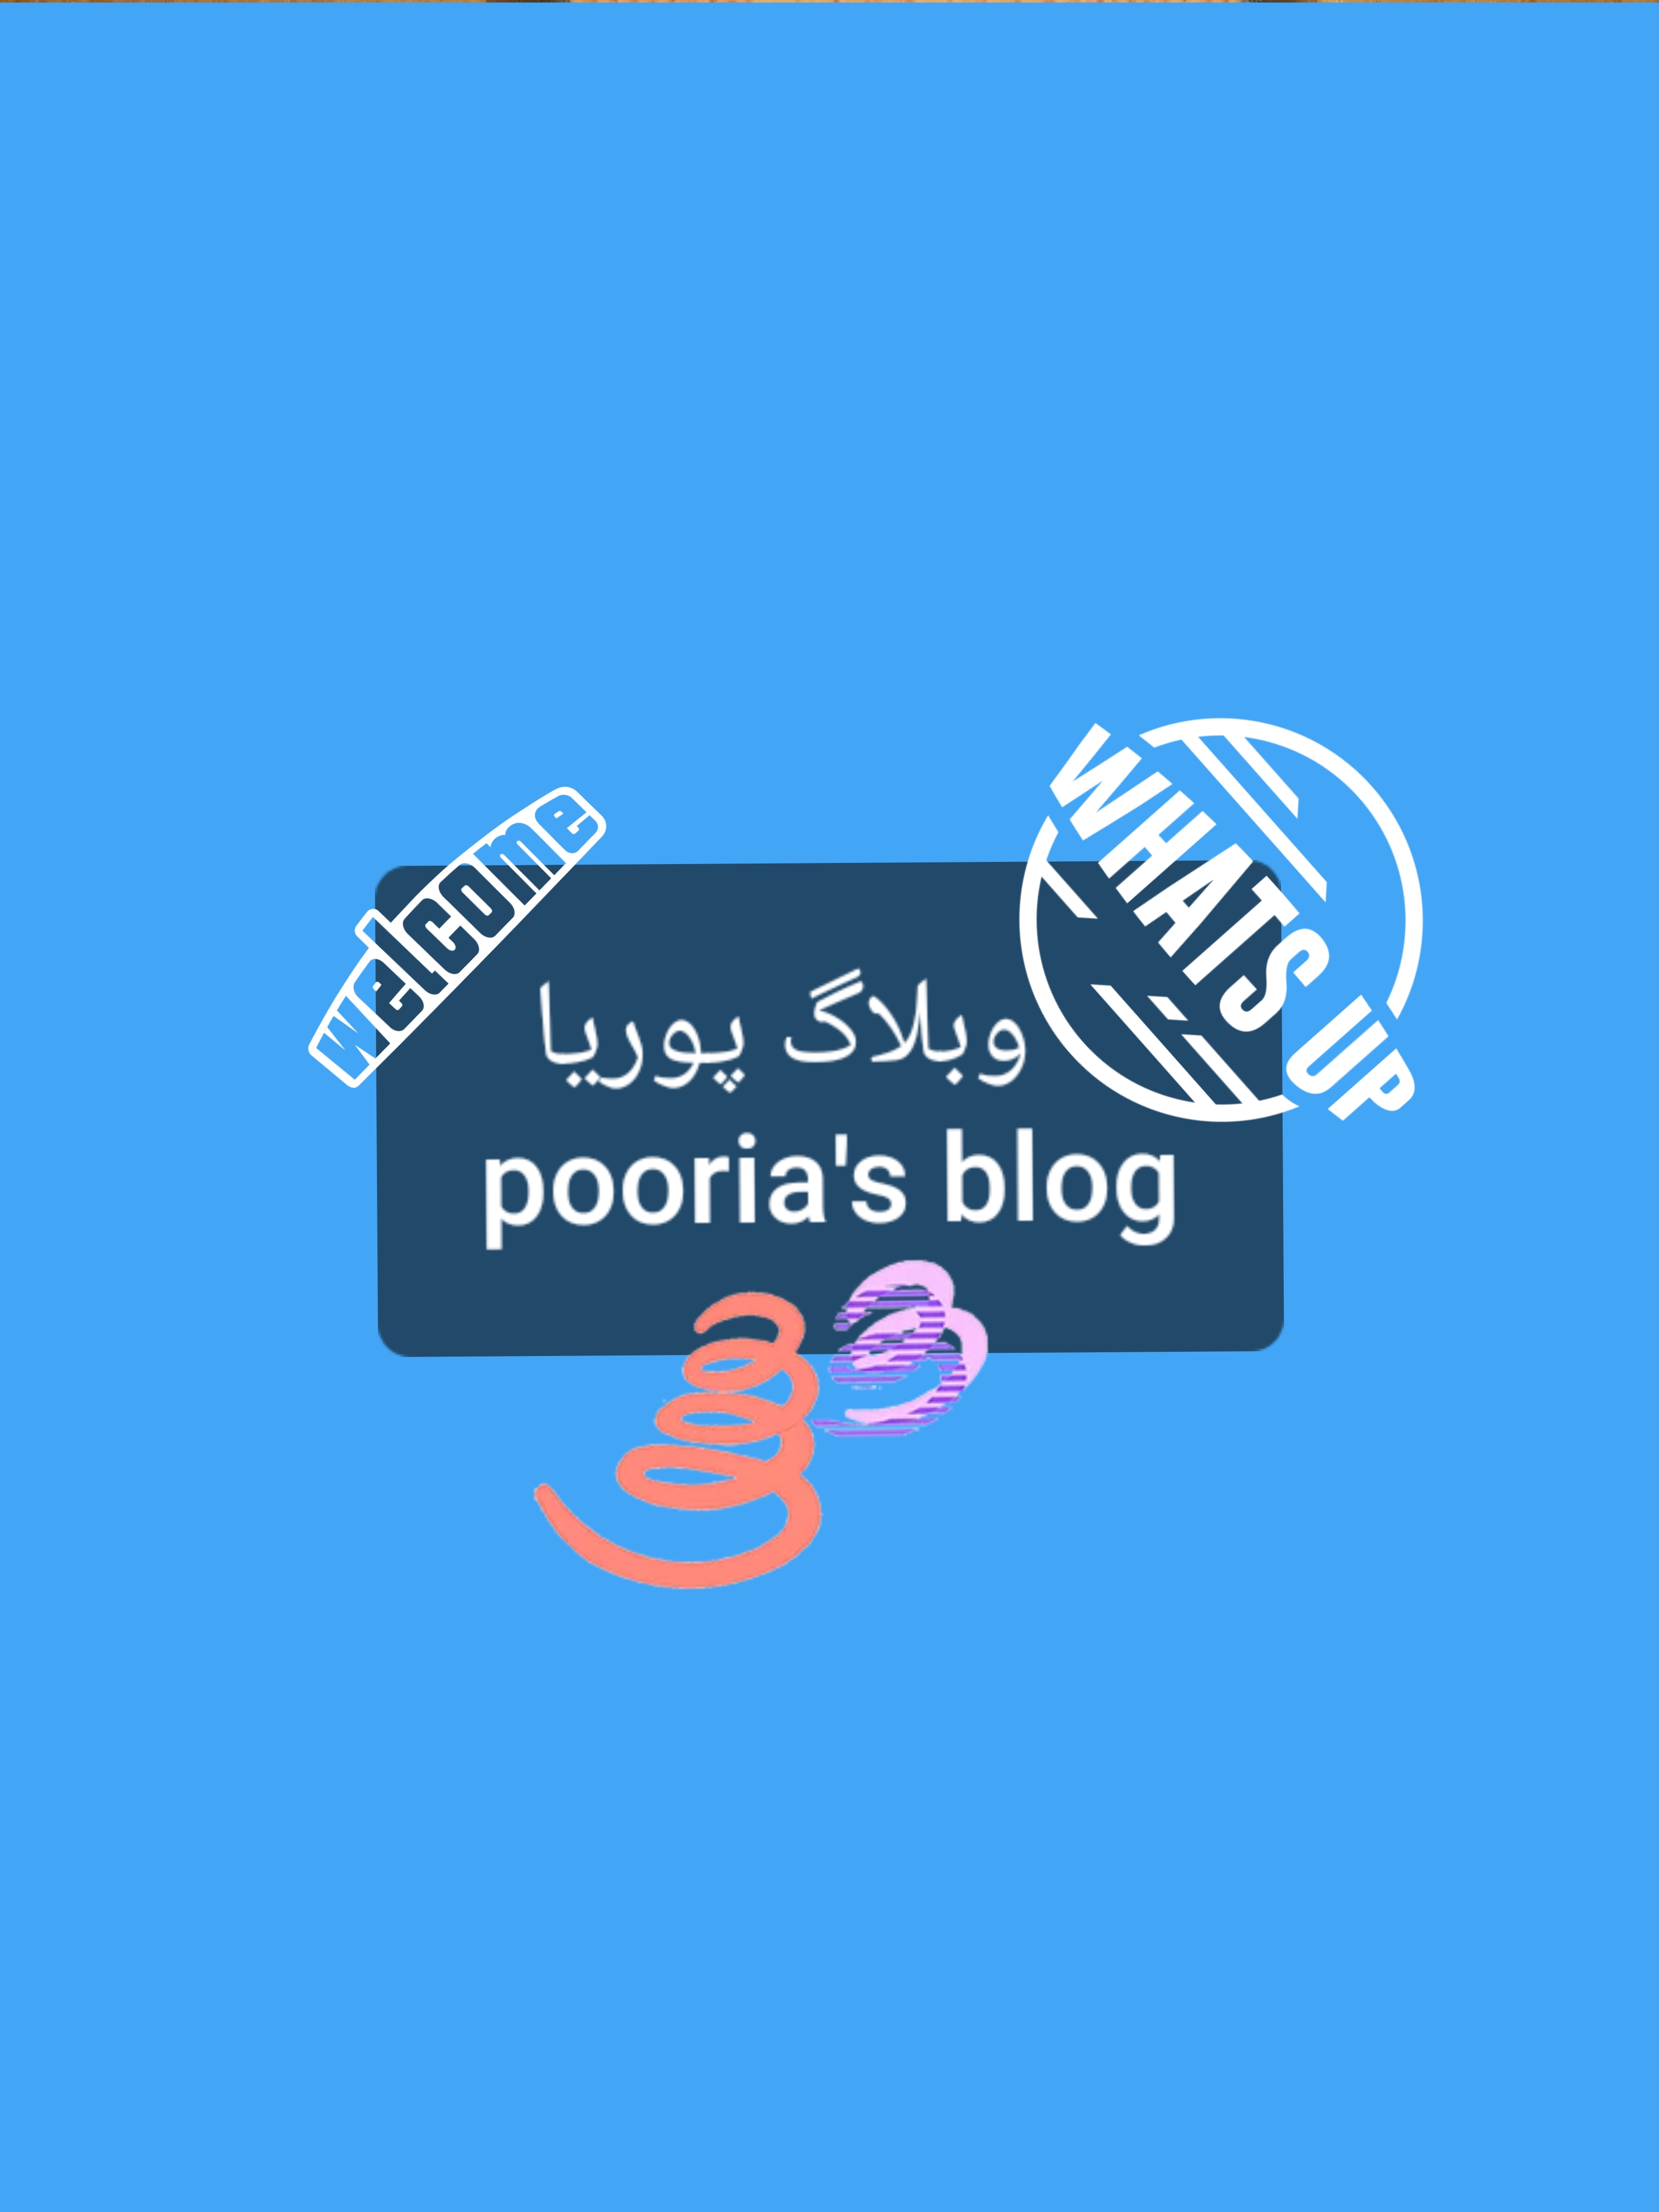 Pooria 's blog/ وبلاگ پوریا